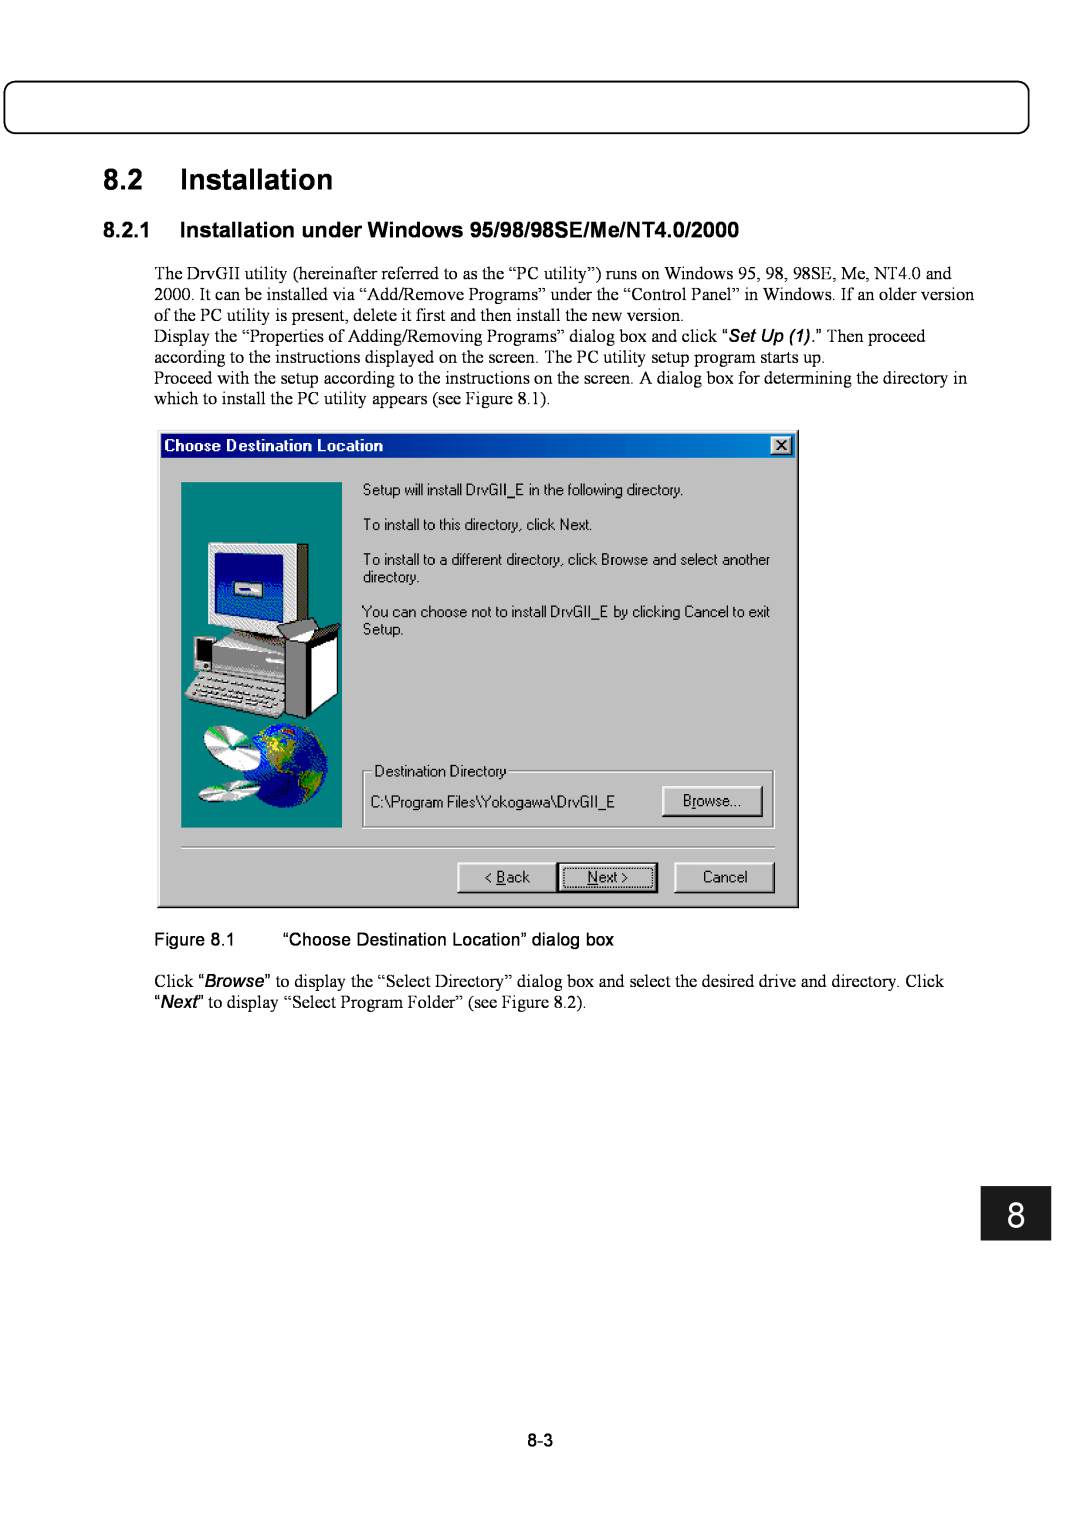 Parker Hannifin G2 manual Installation under Windows 95/98/98SE/Me/NT4.0/2000 